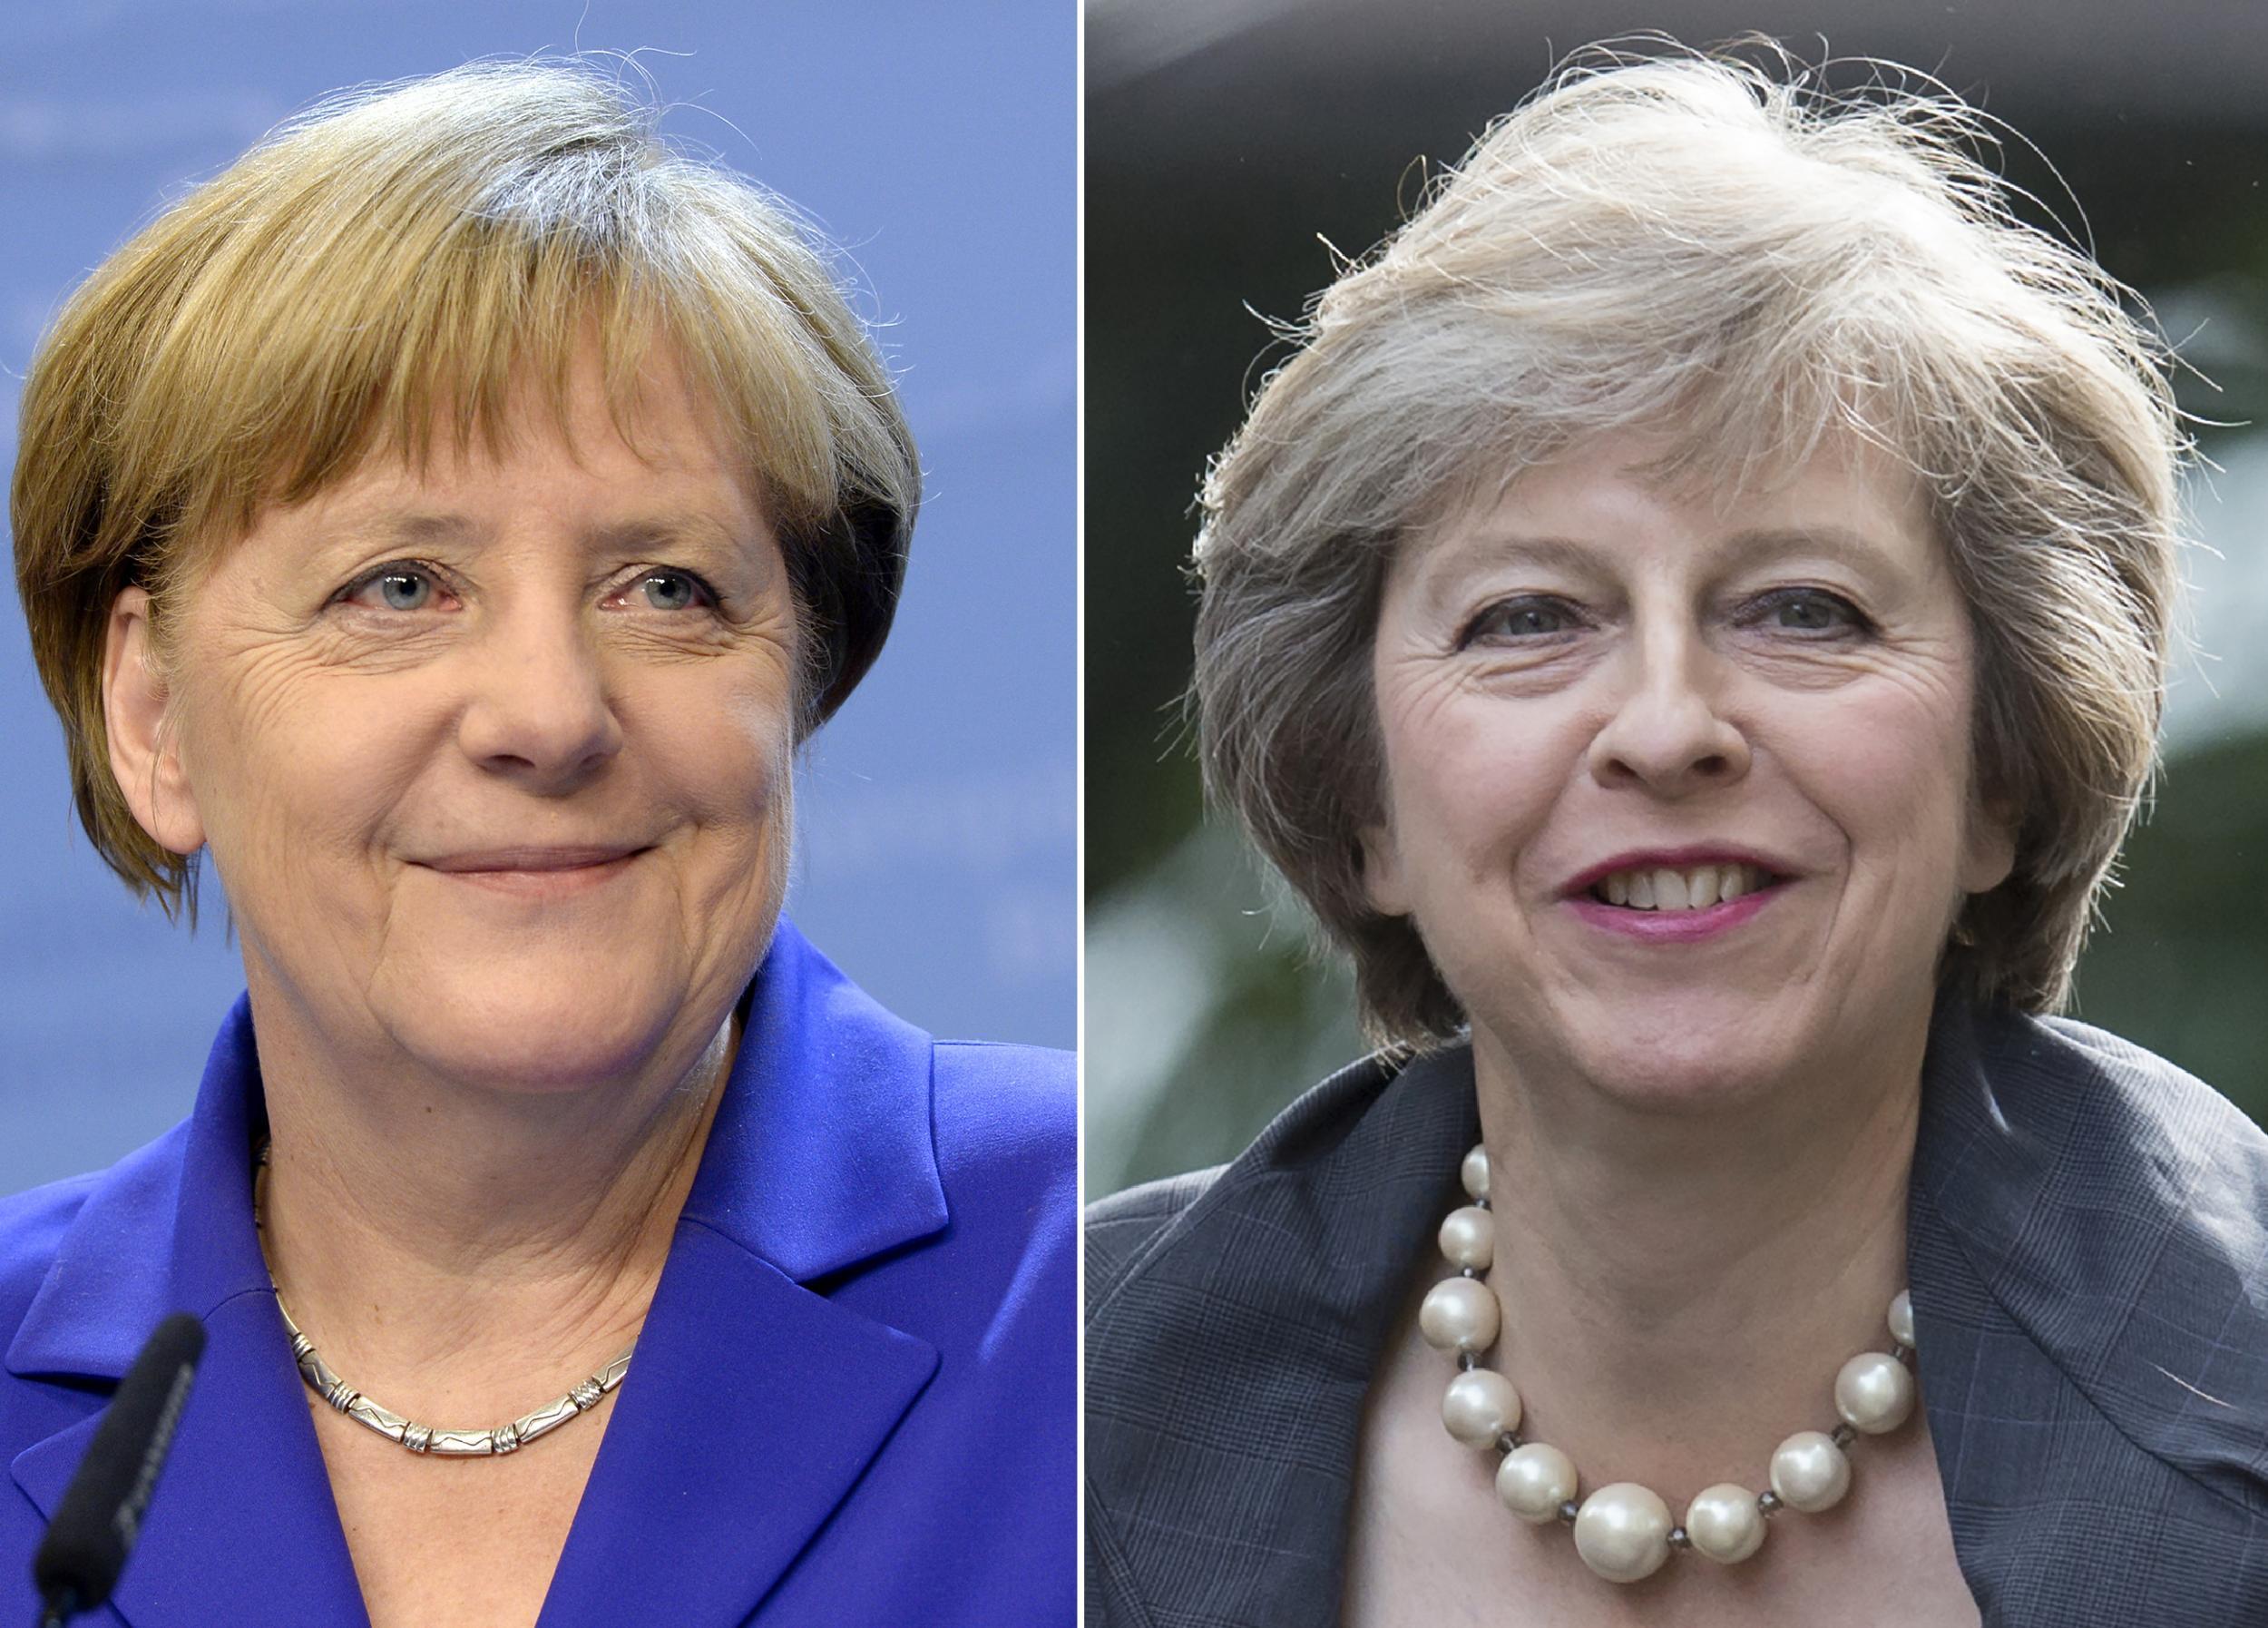 Ms May will meet Ms Merkel on Wednesday in Berlin